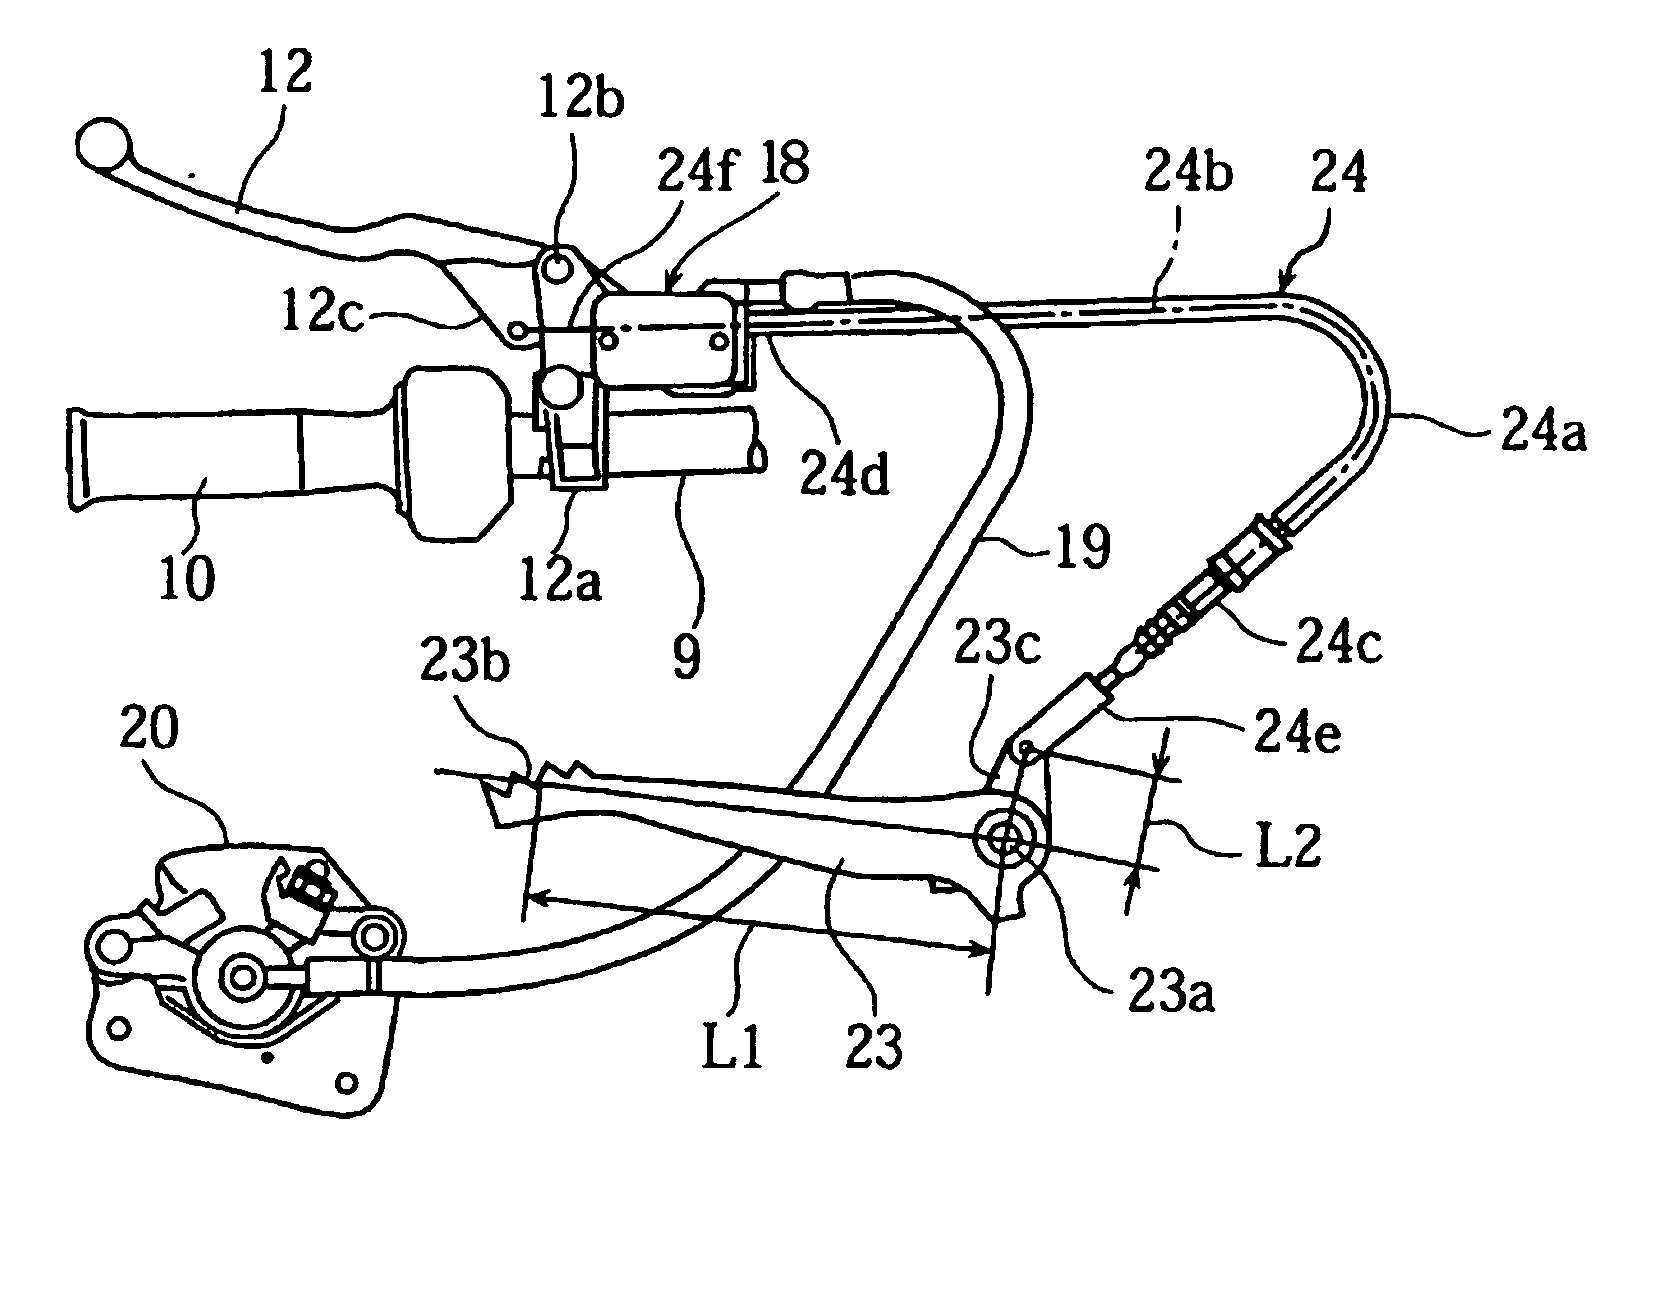 Brake system for straddle-type vehicle